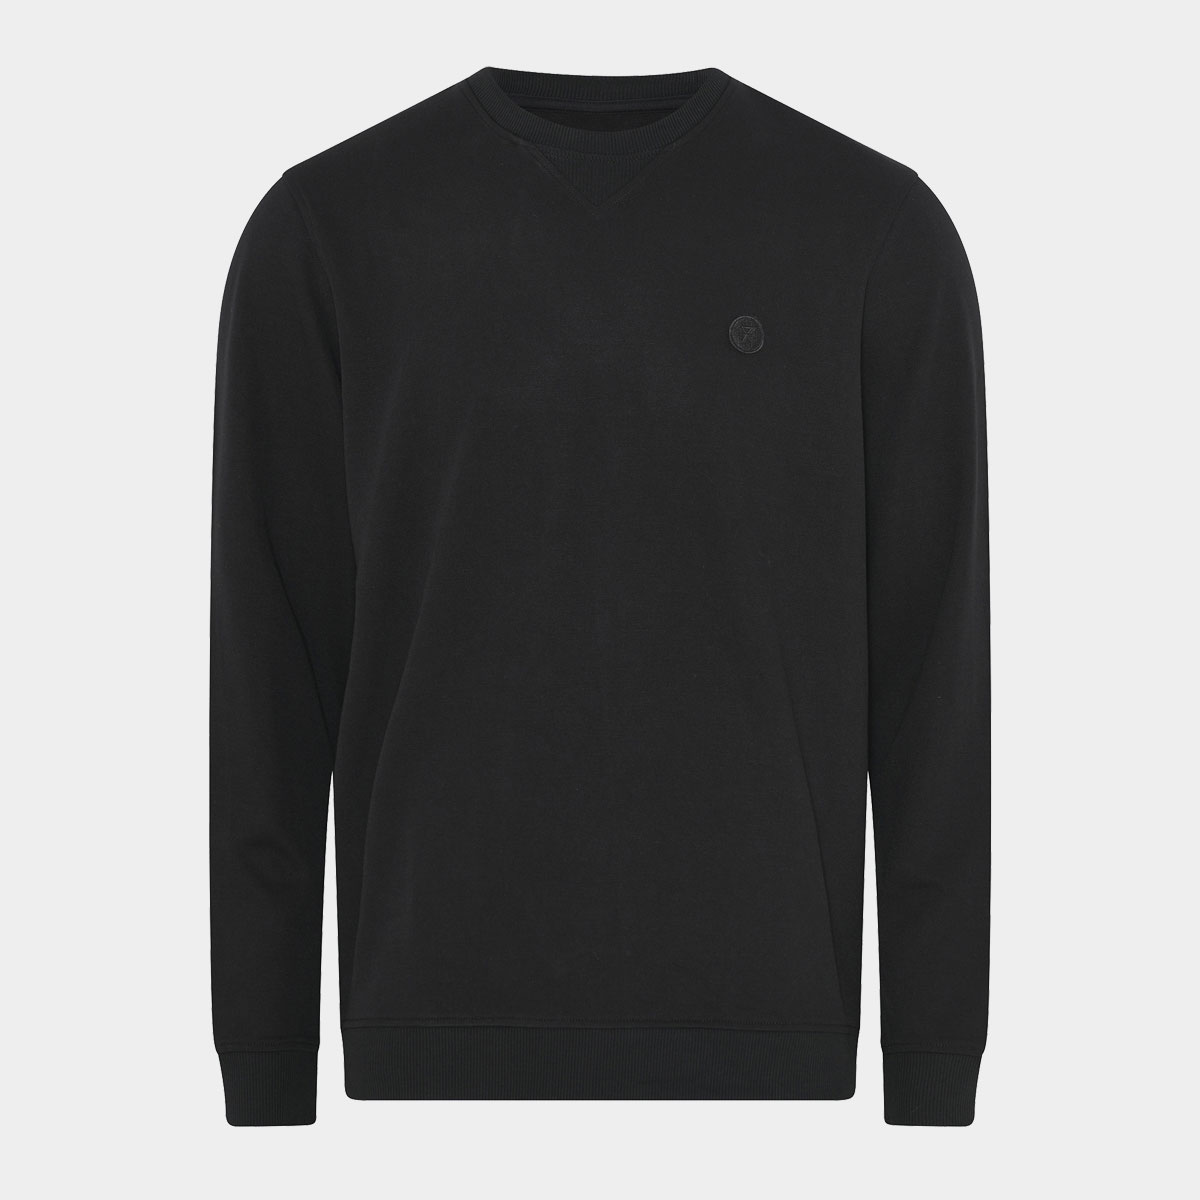 Bambus sweatshirt | sort sweatshirt til mænd fra JBS of Denmark, XXL